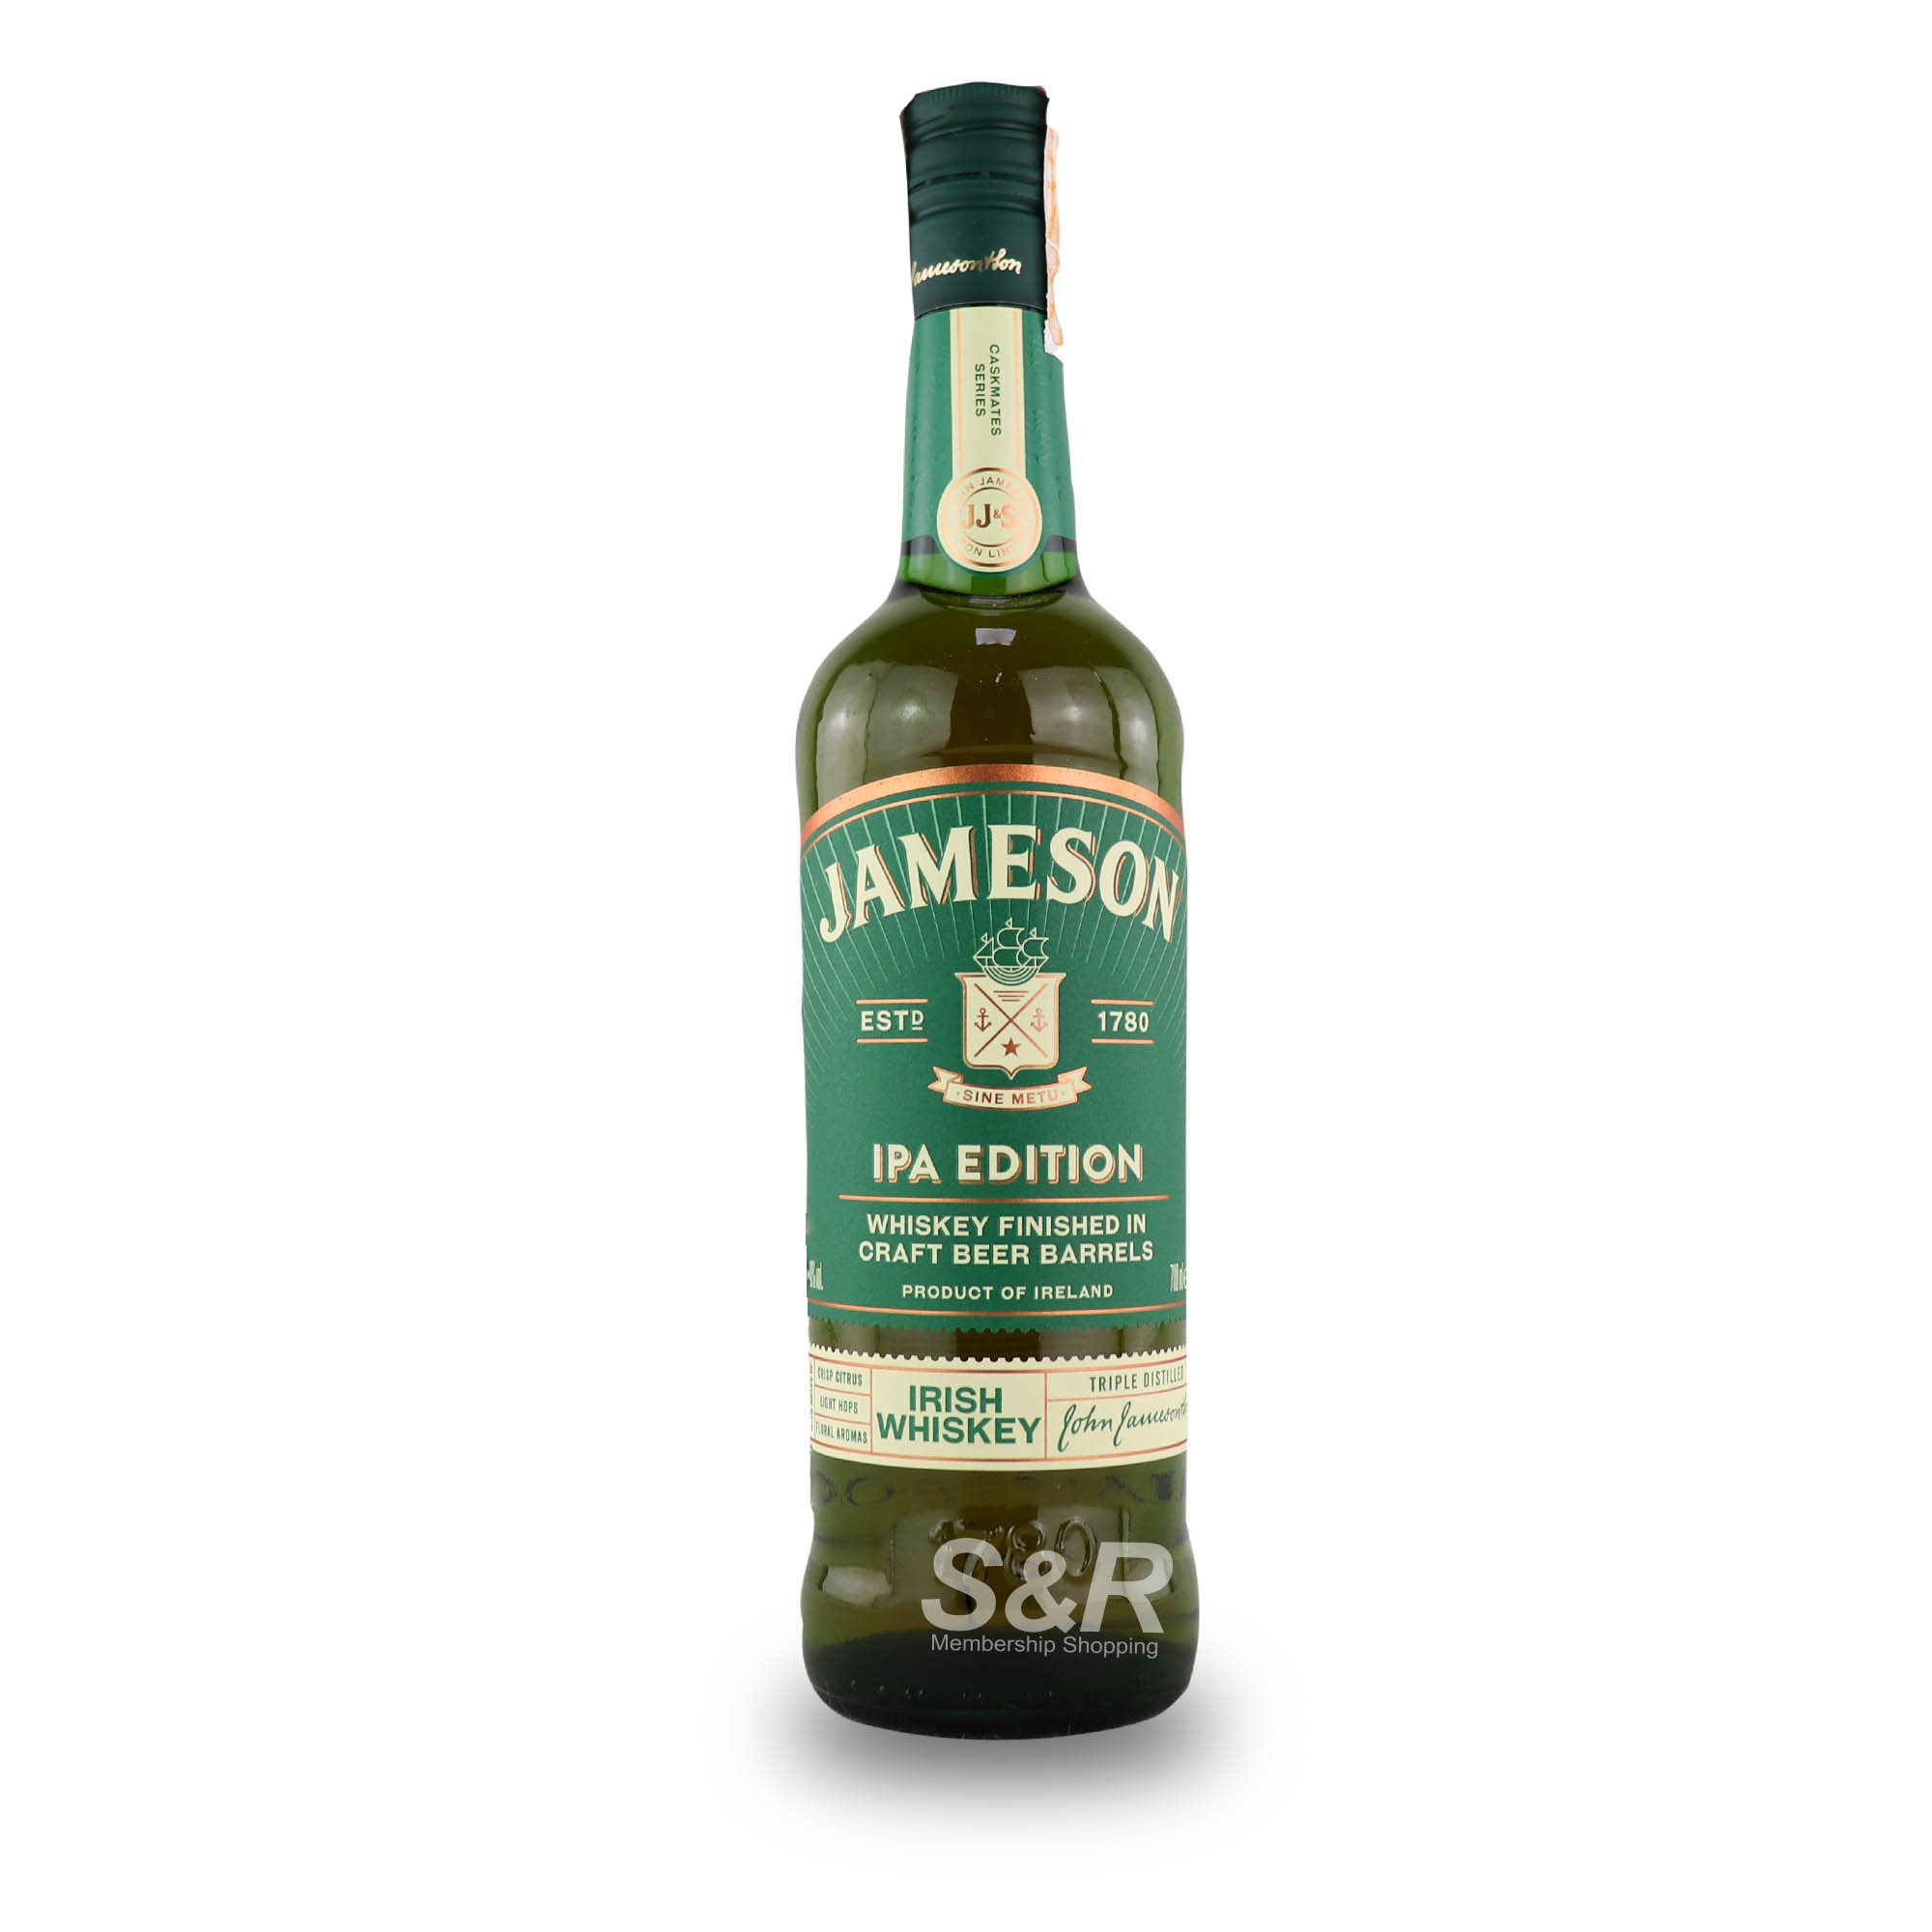 Jameson IPA Edition Irish Whiskey 700mL